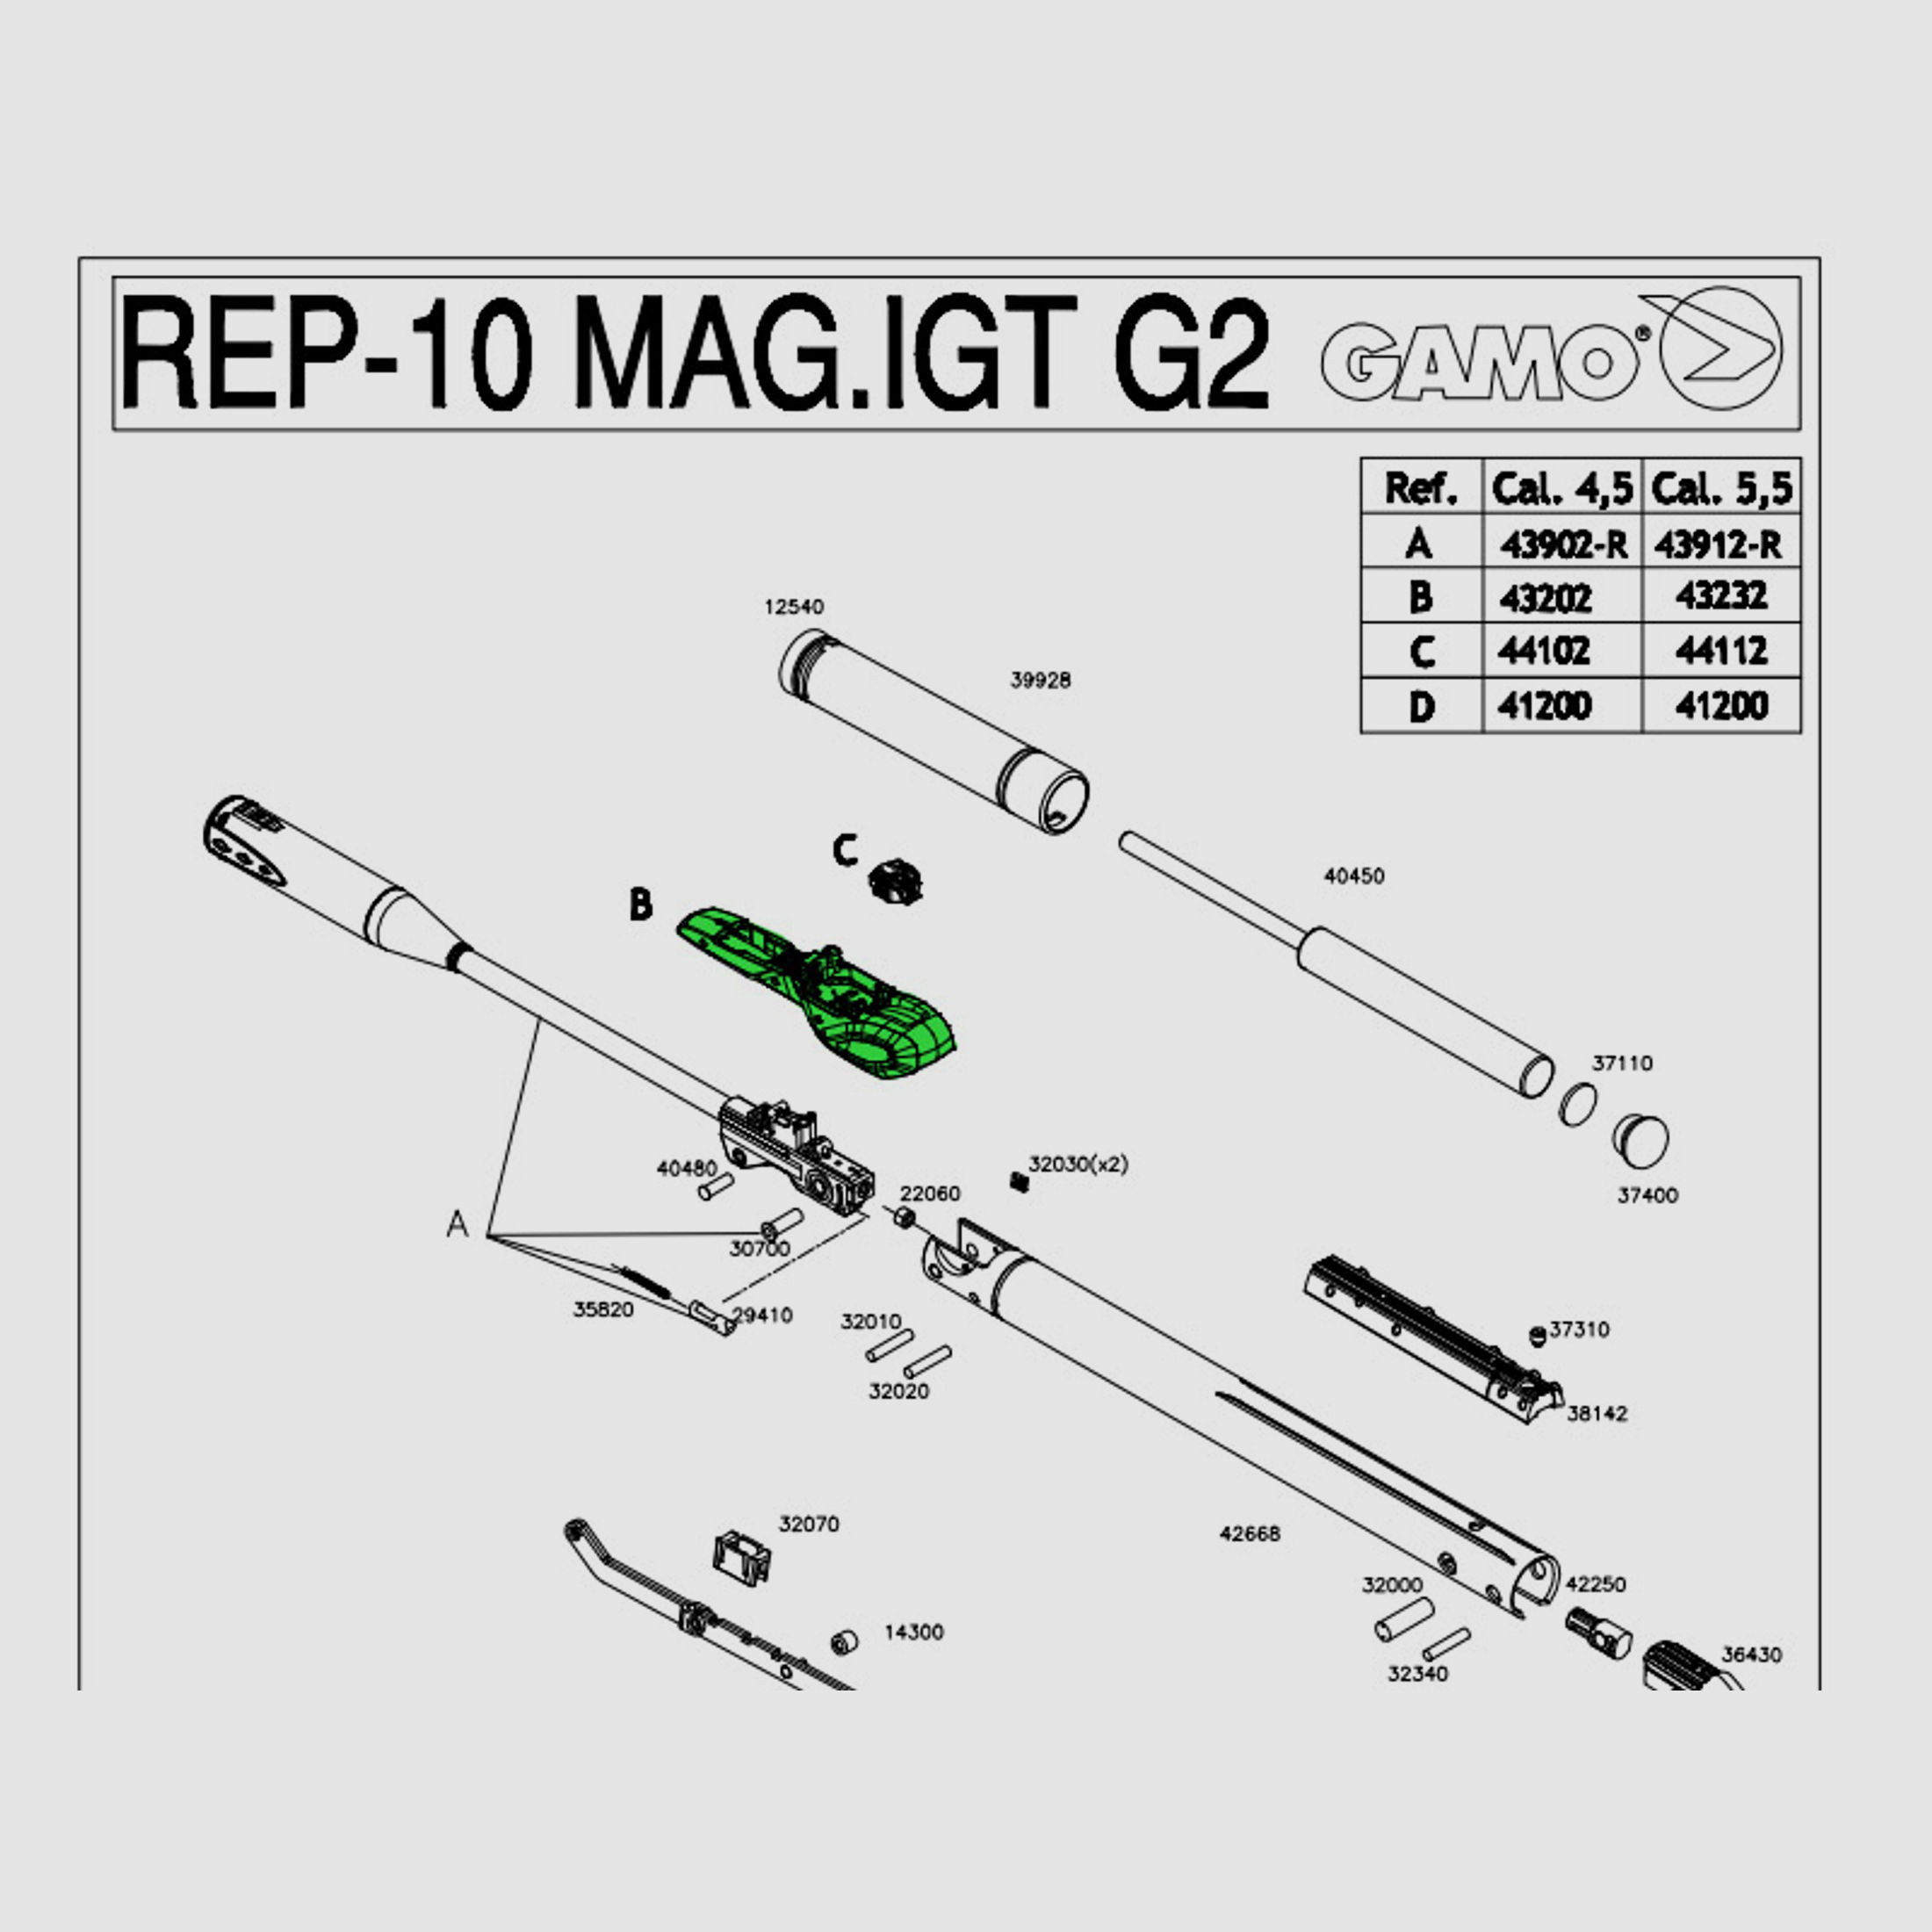 MagazingehĂ¤use (Lademechanismus) fĂĽr Luftgewher Gamo Replay 10 Magnum IGT Gen2 Kaliber 5,5 mm